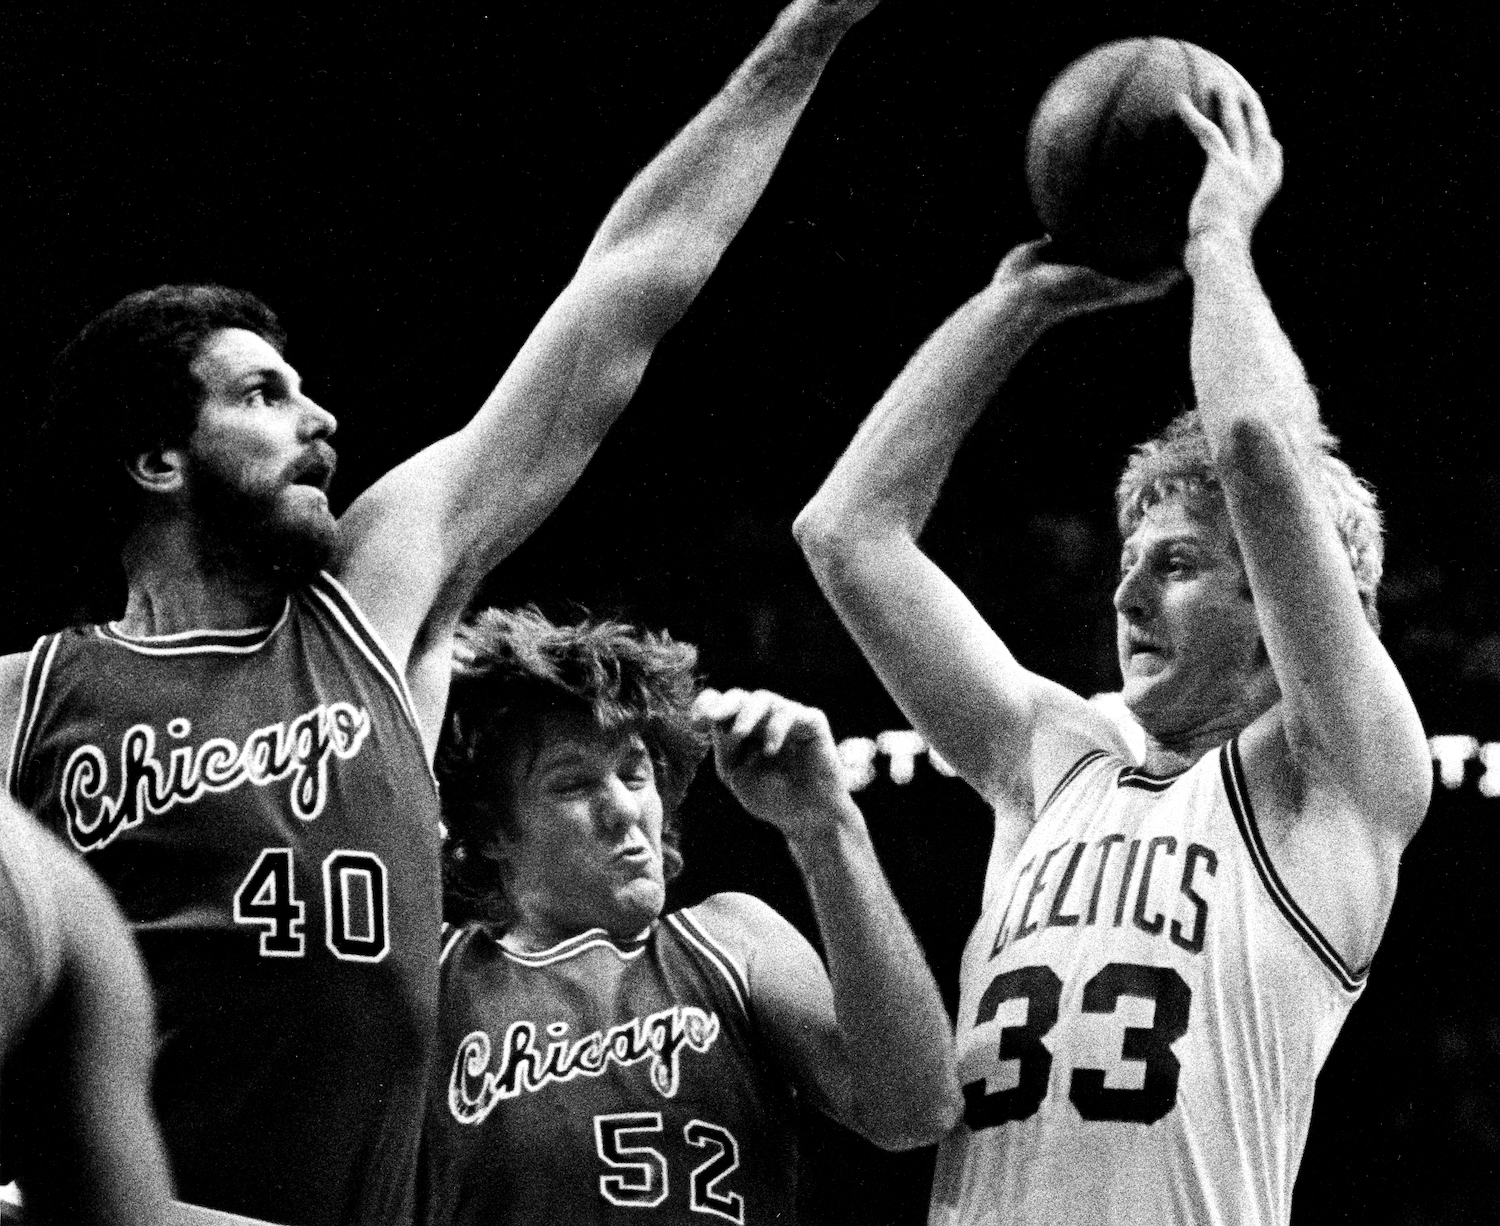 Boston Celtics star Larry Bird attempts a shot against the Chicago Bulls.